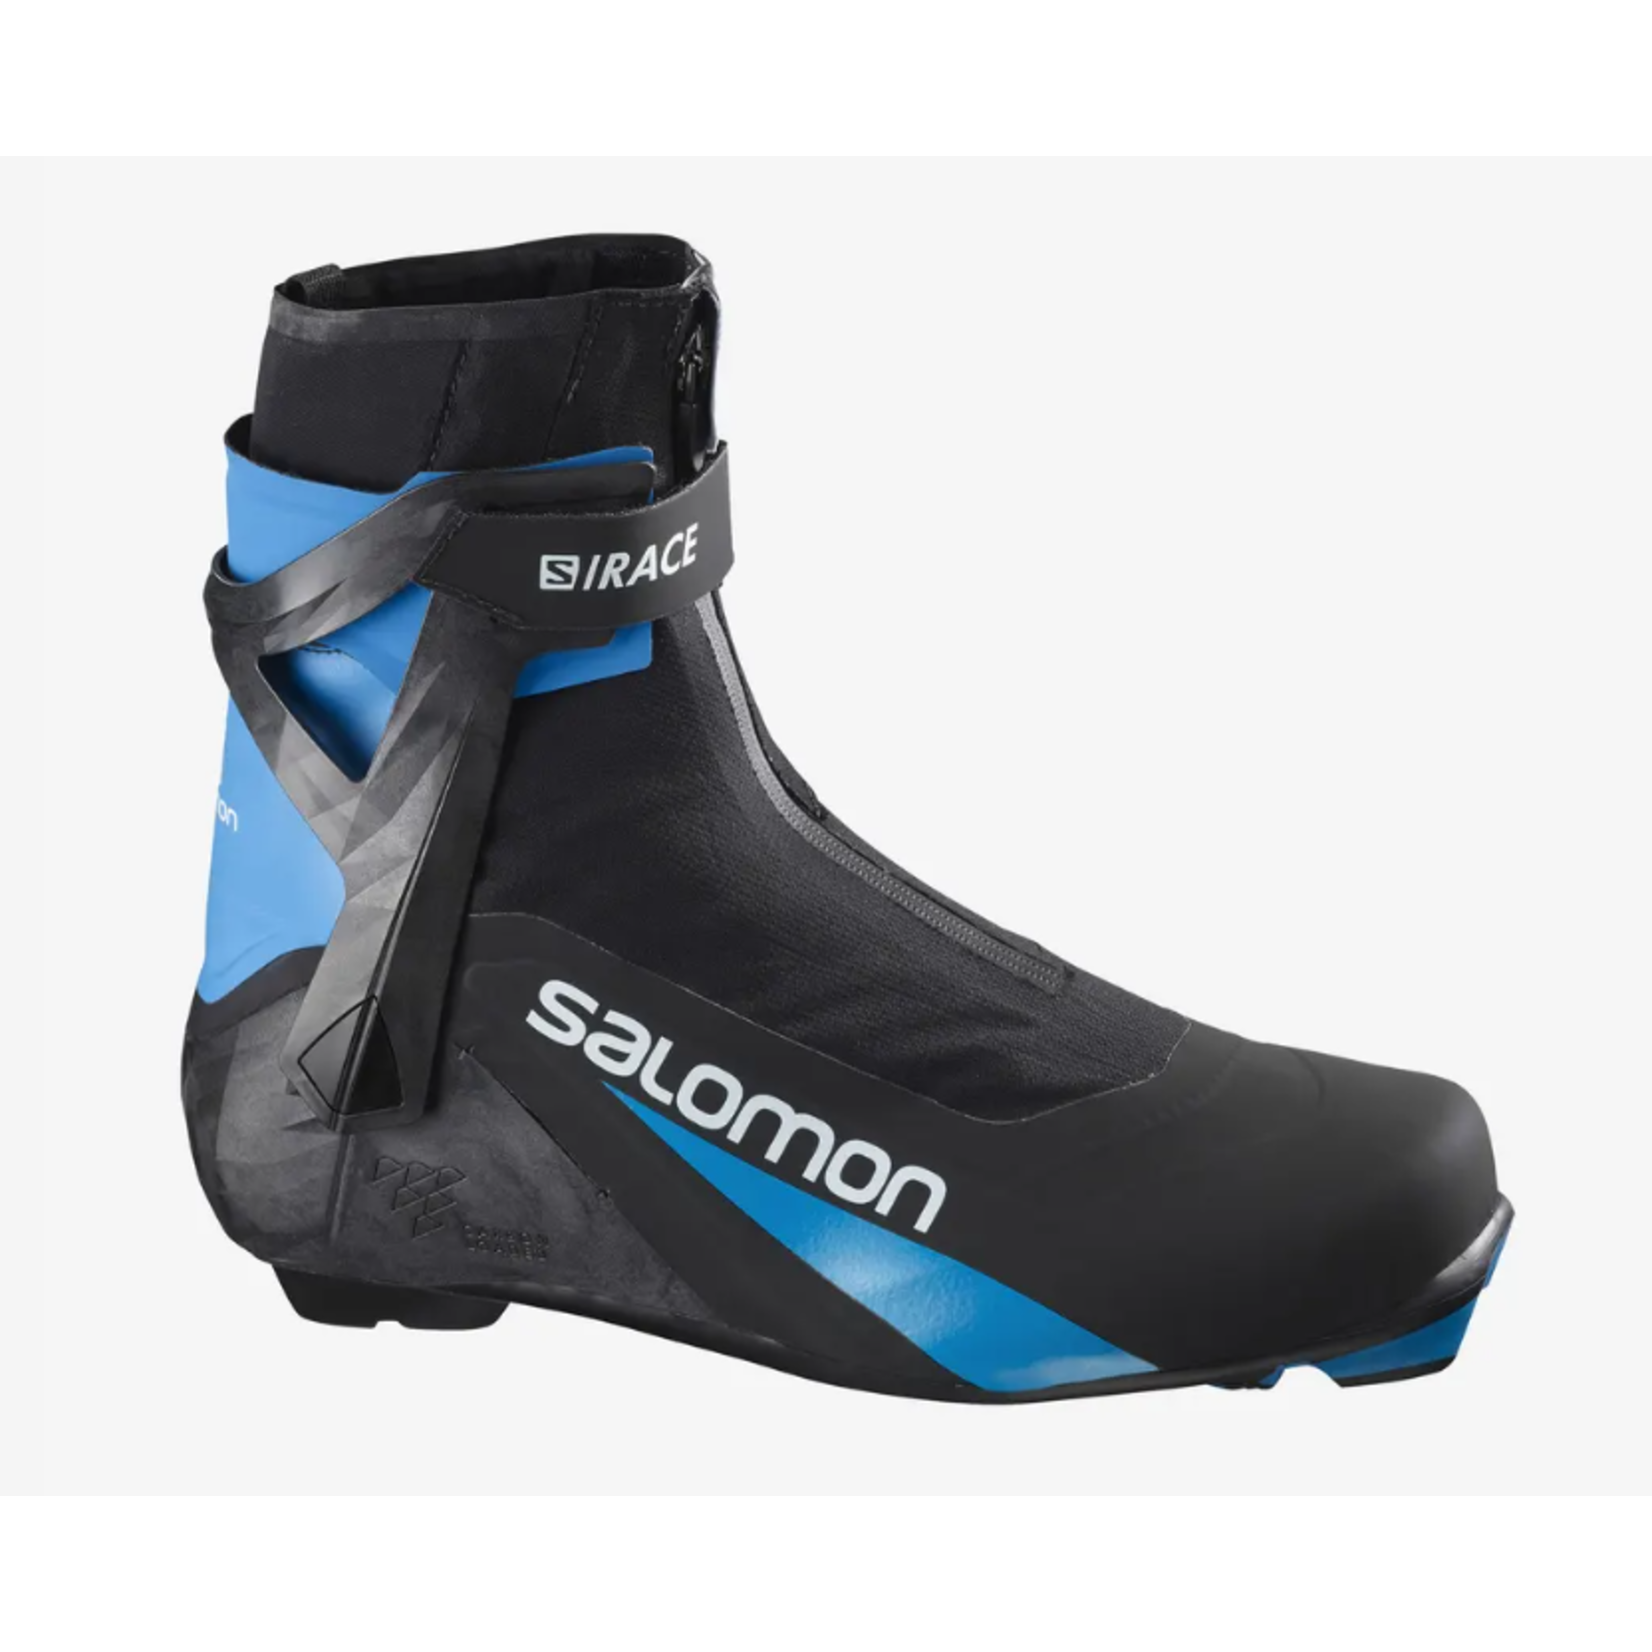 Salomon Salomon S/Race Carbon Skate Prolink